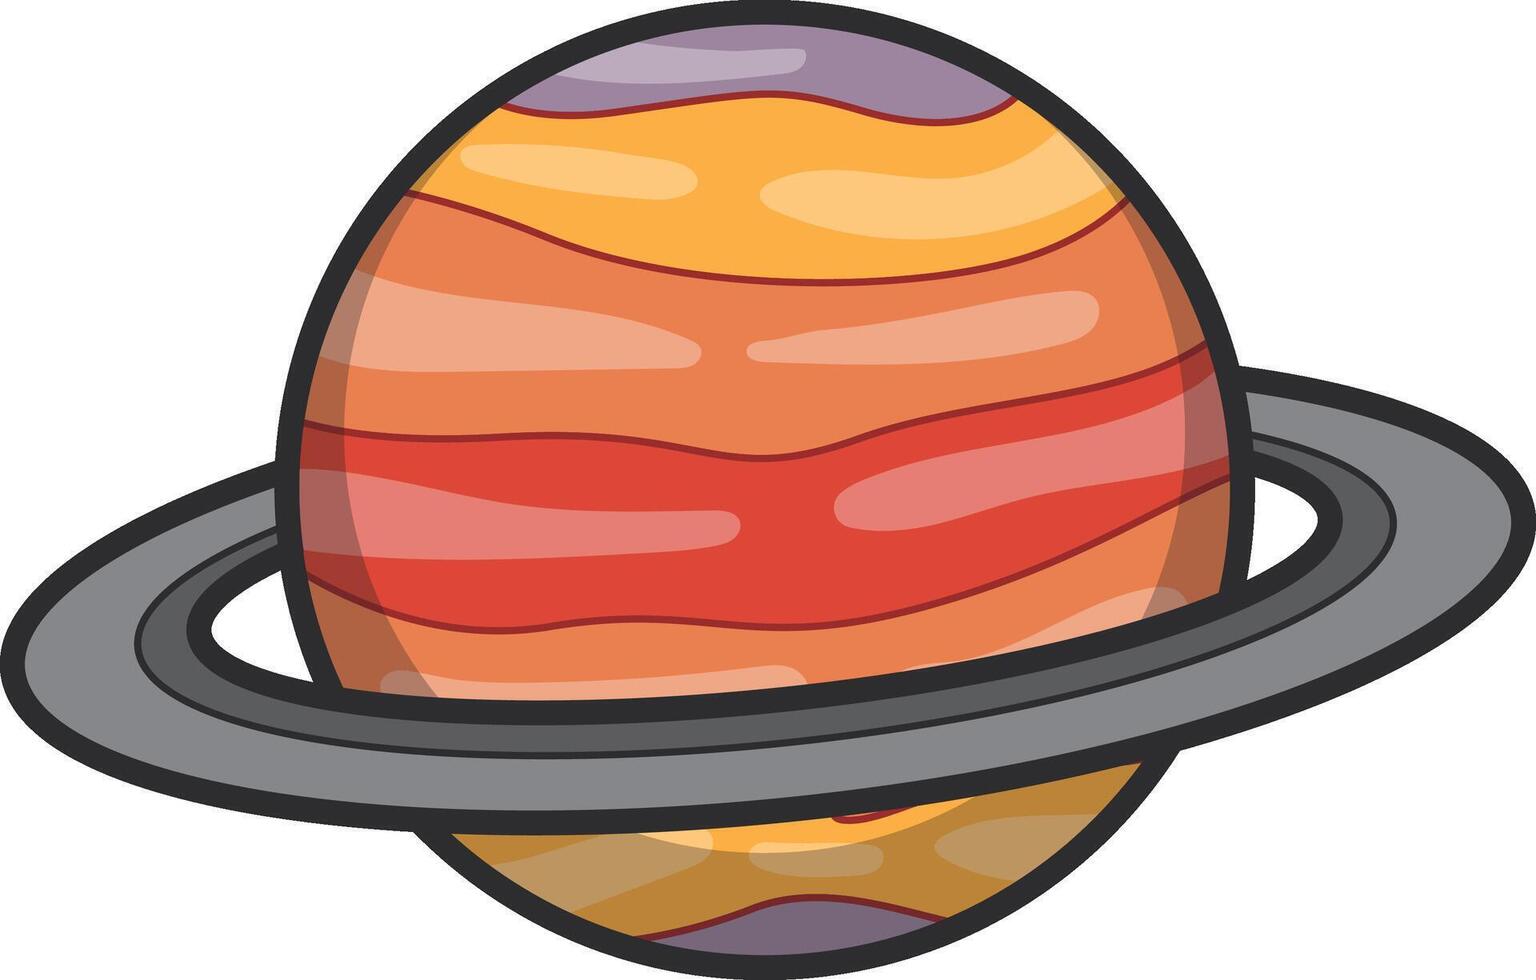 Saturn icon illustration vector